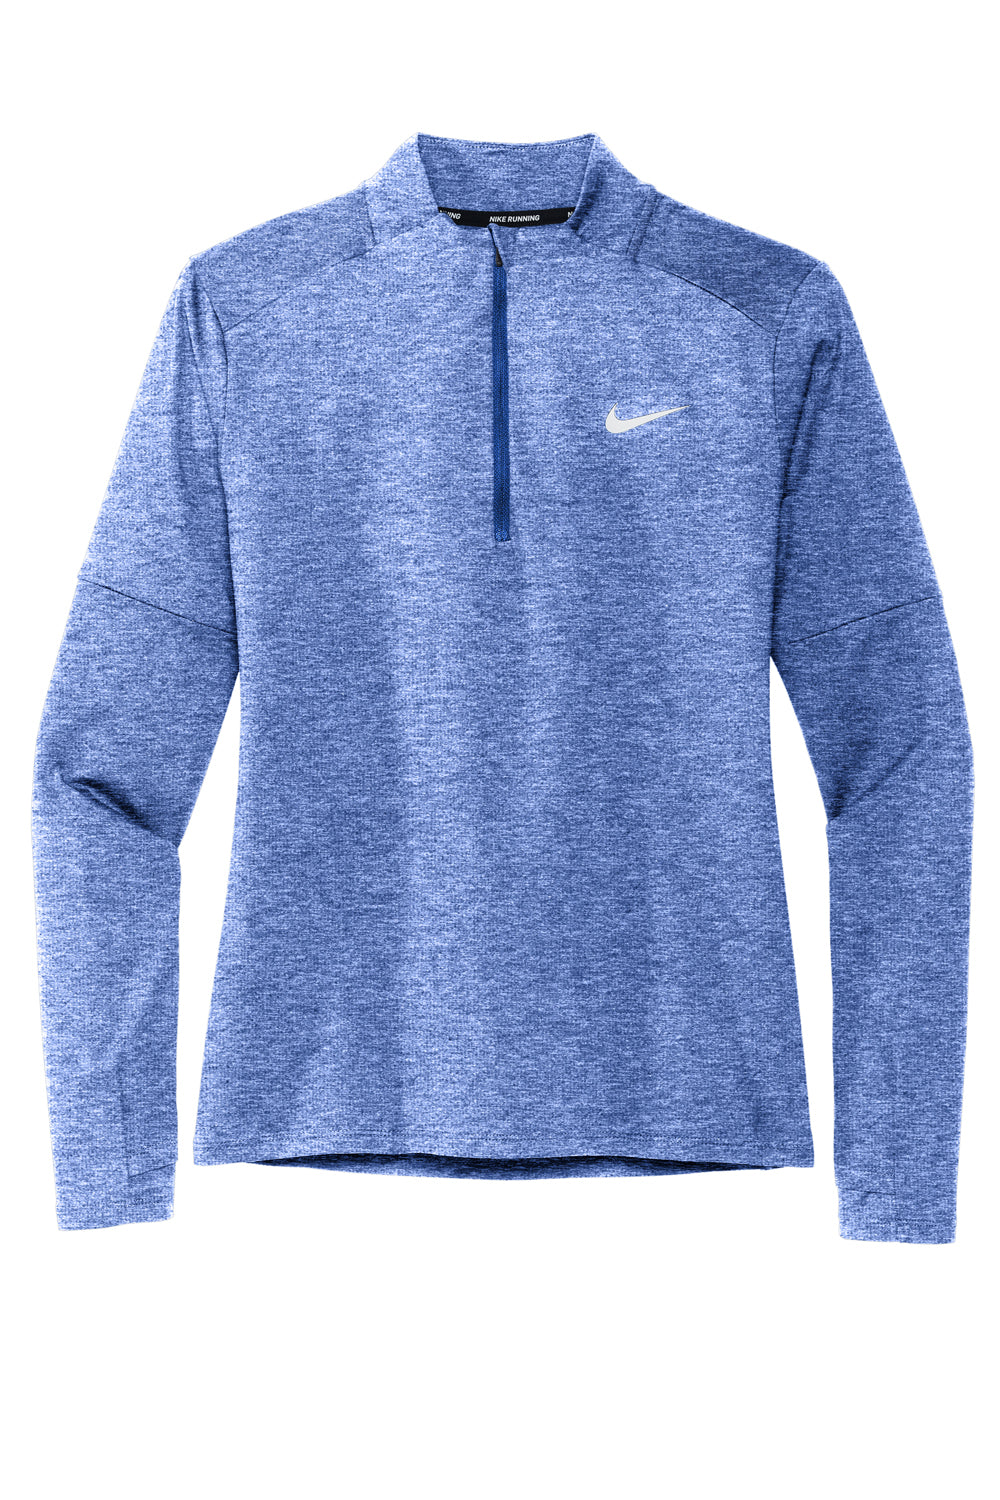 Nike Womens Element Dri-Fit Moisture Wicking 1/4 Zip Sweatshirt - Heather  Royal Blue